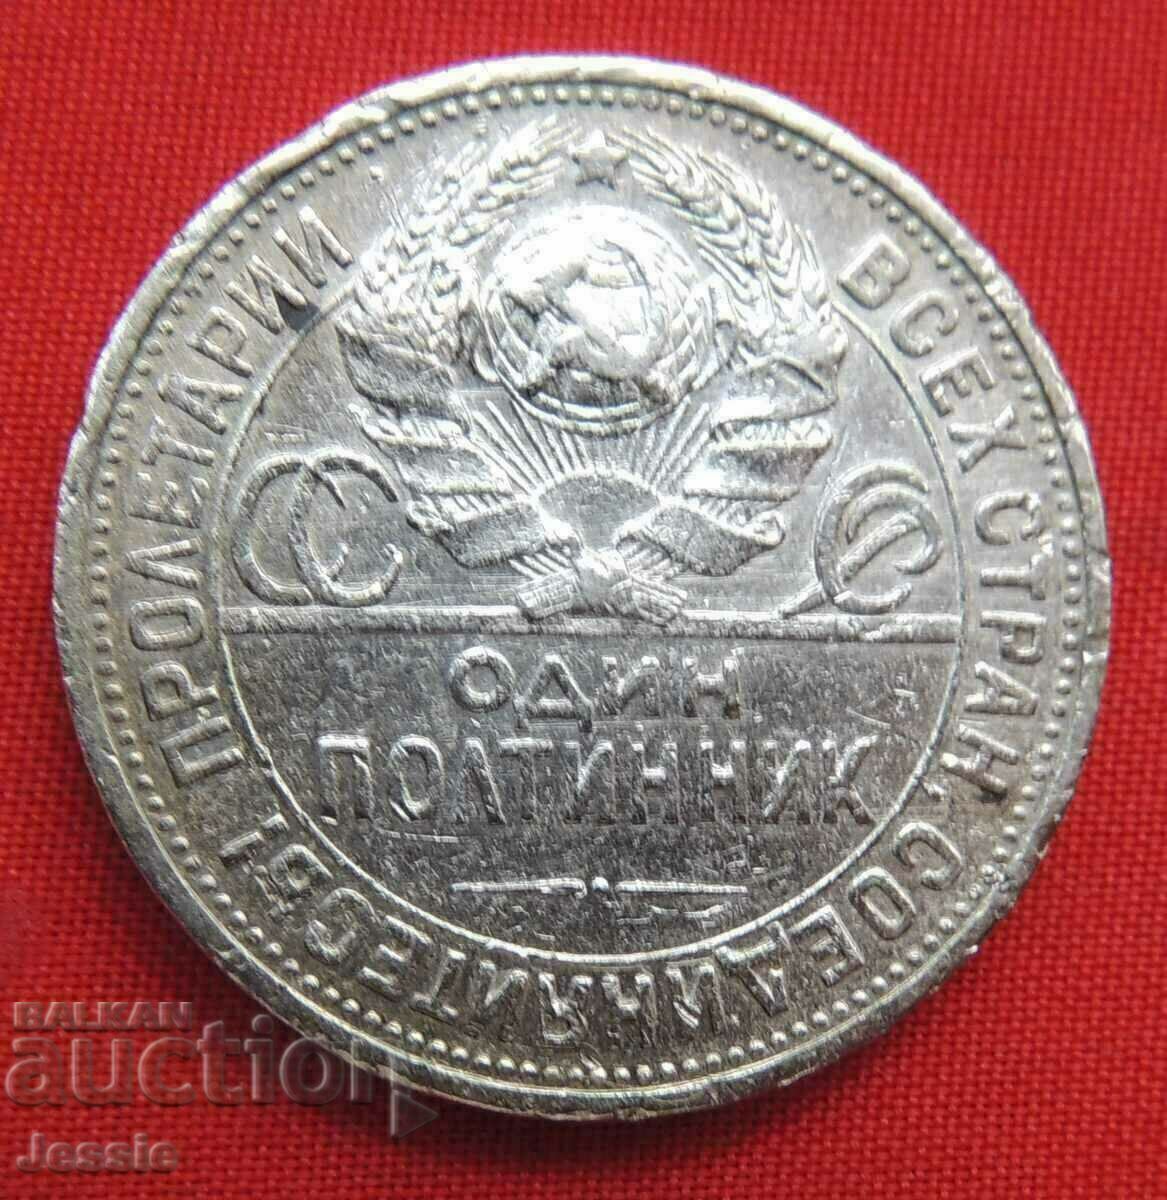 1 poltinnik 1924 PL SOVIET RUSSIA silver